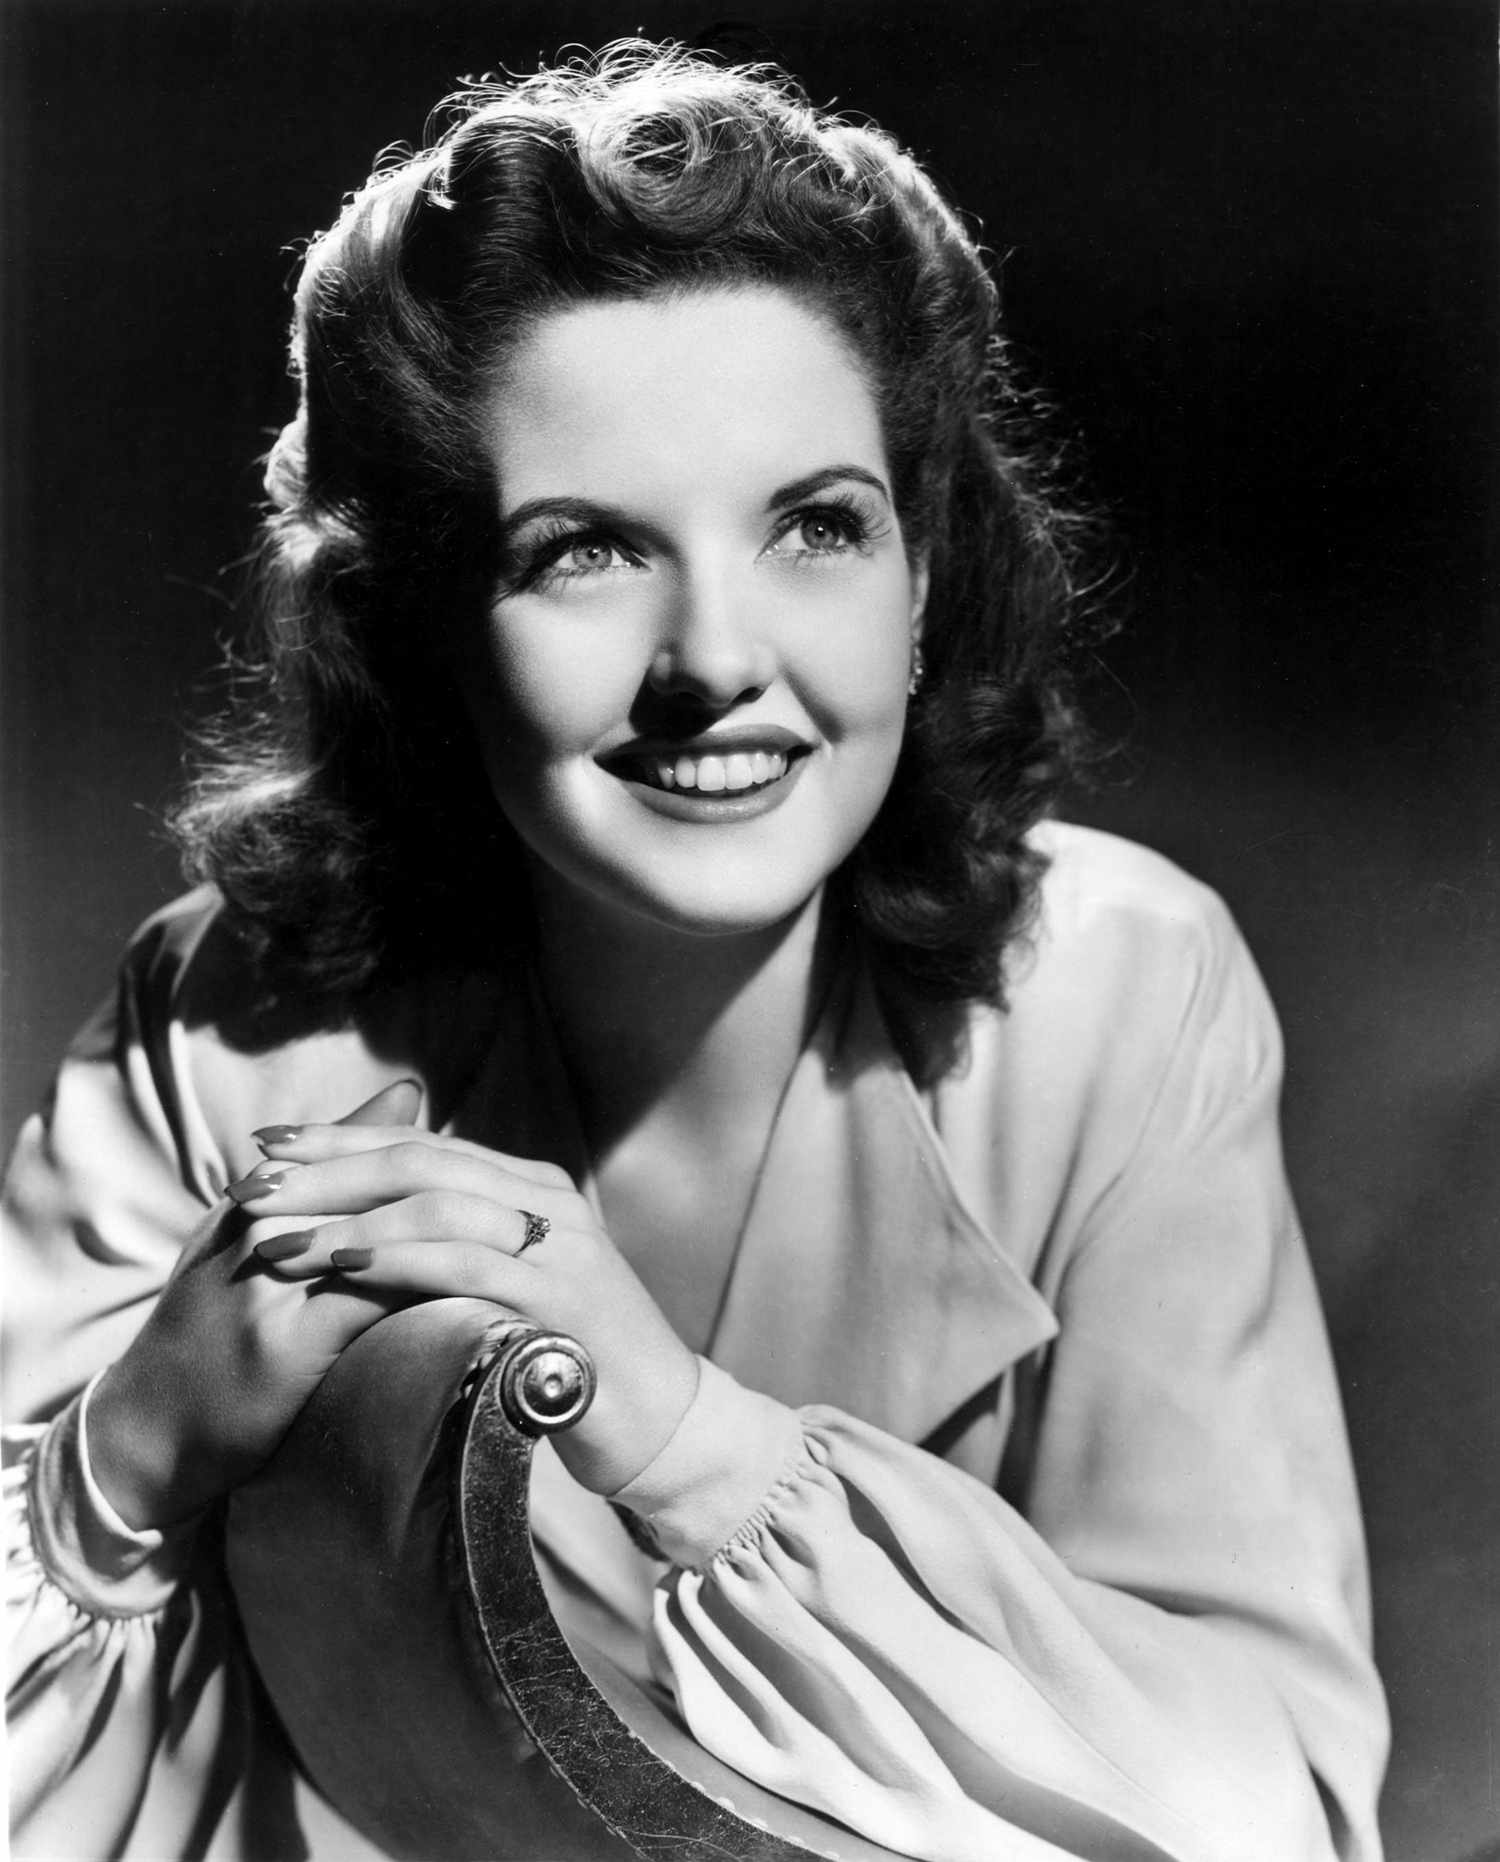 Virginia Patton Moss, 'It's a Wonderful Life' actress, dies at 97